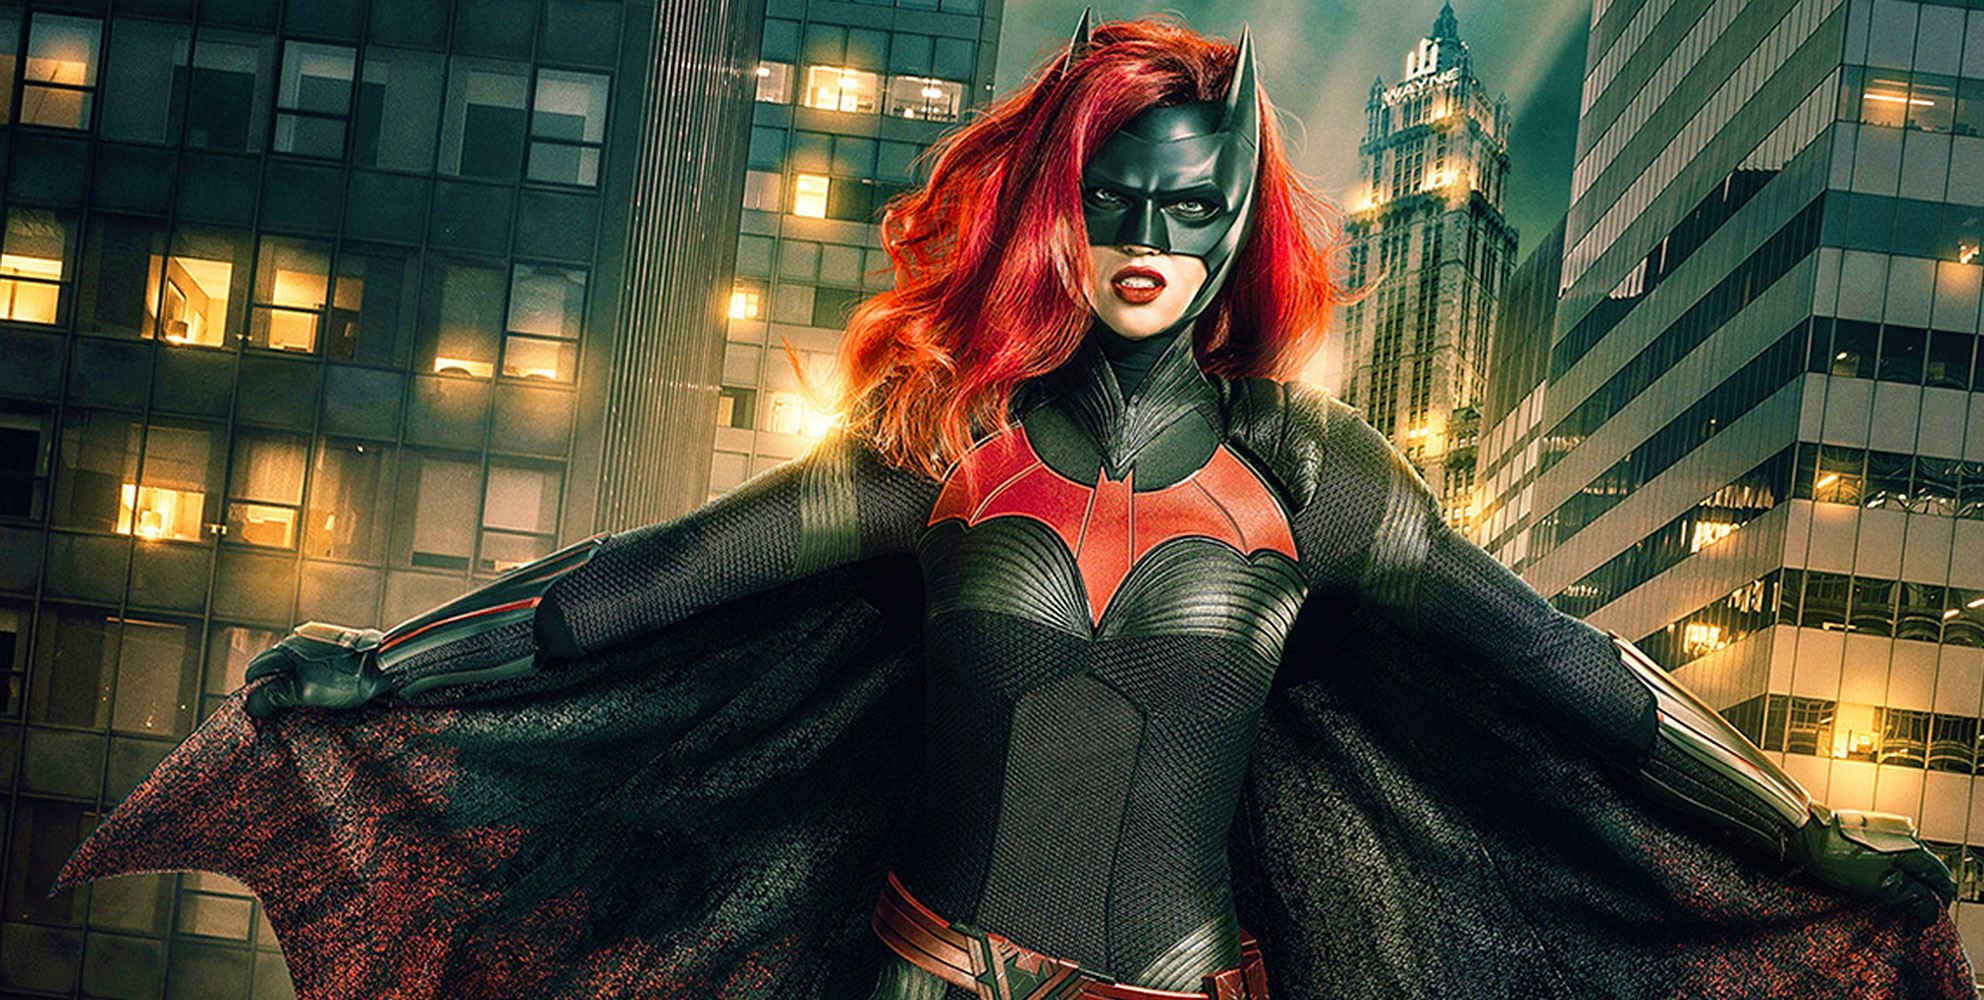 Руби Роуз в образе Бэтвумен на совместном фото с Супергёрл